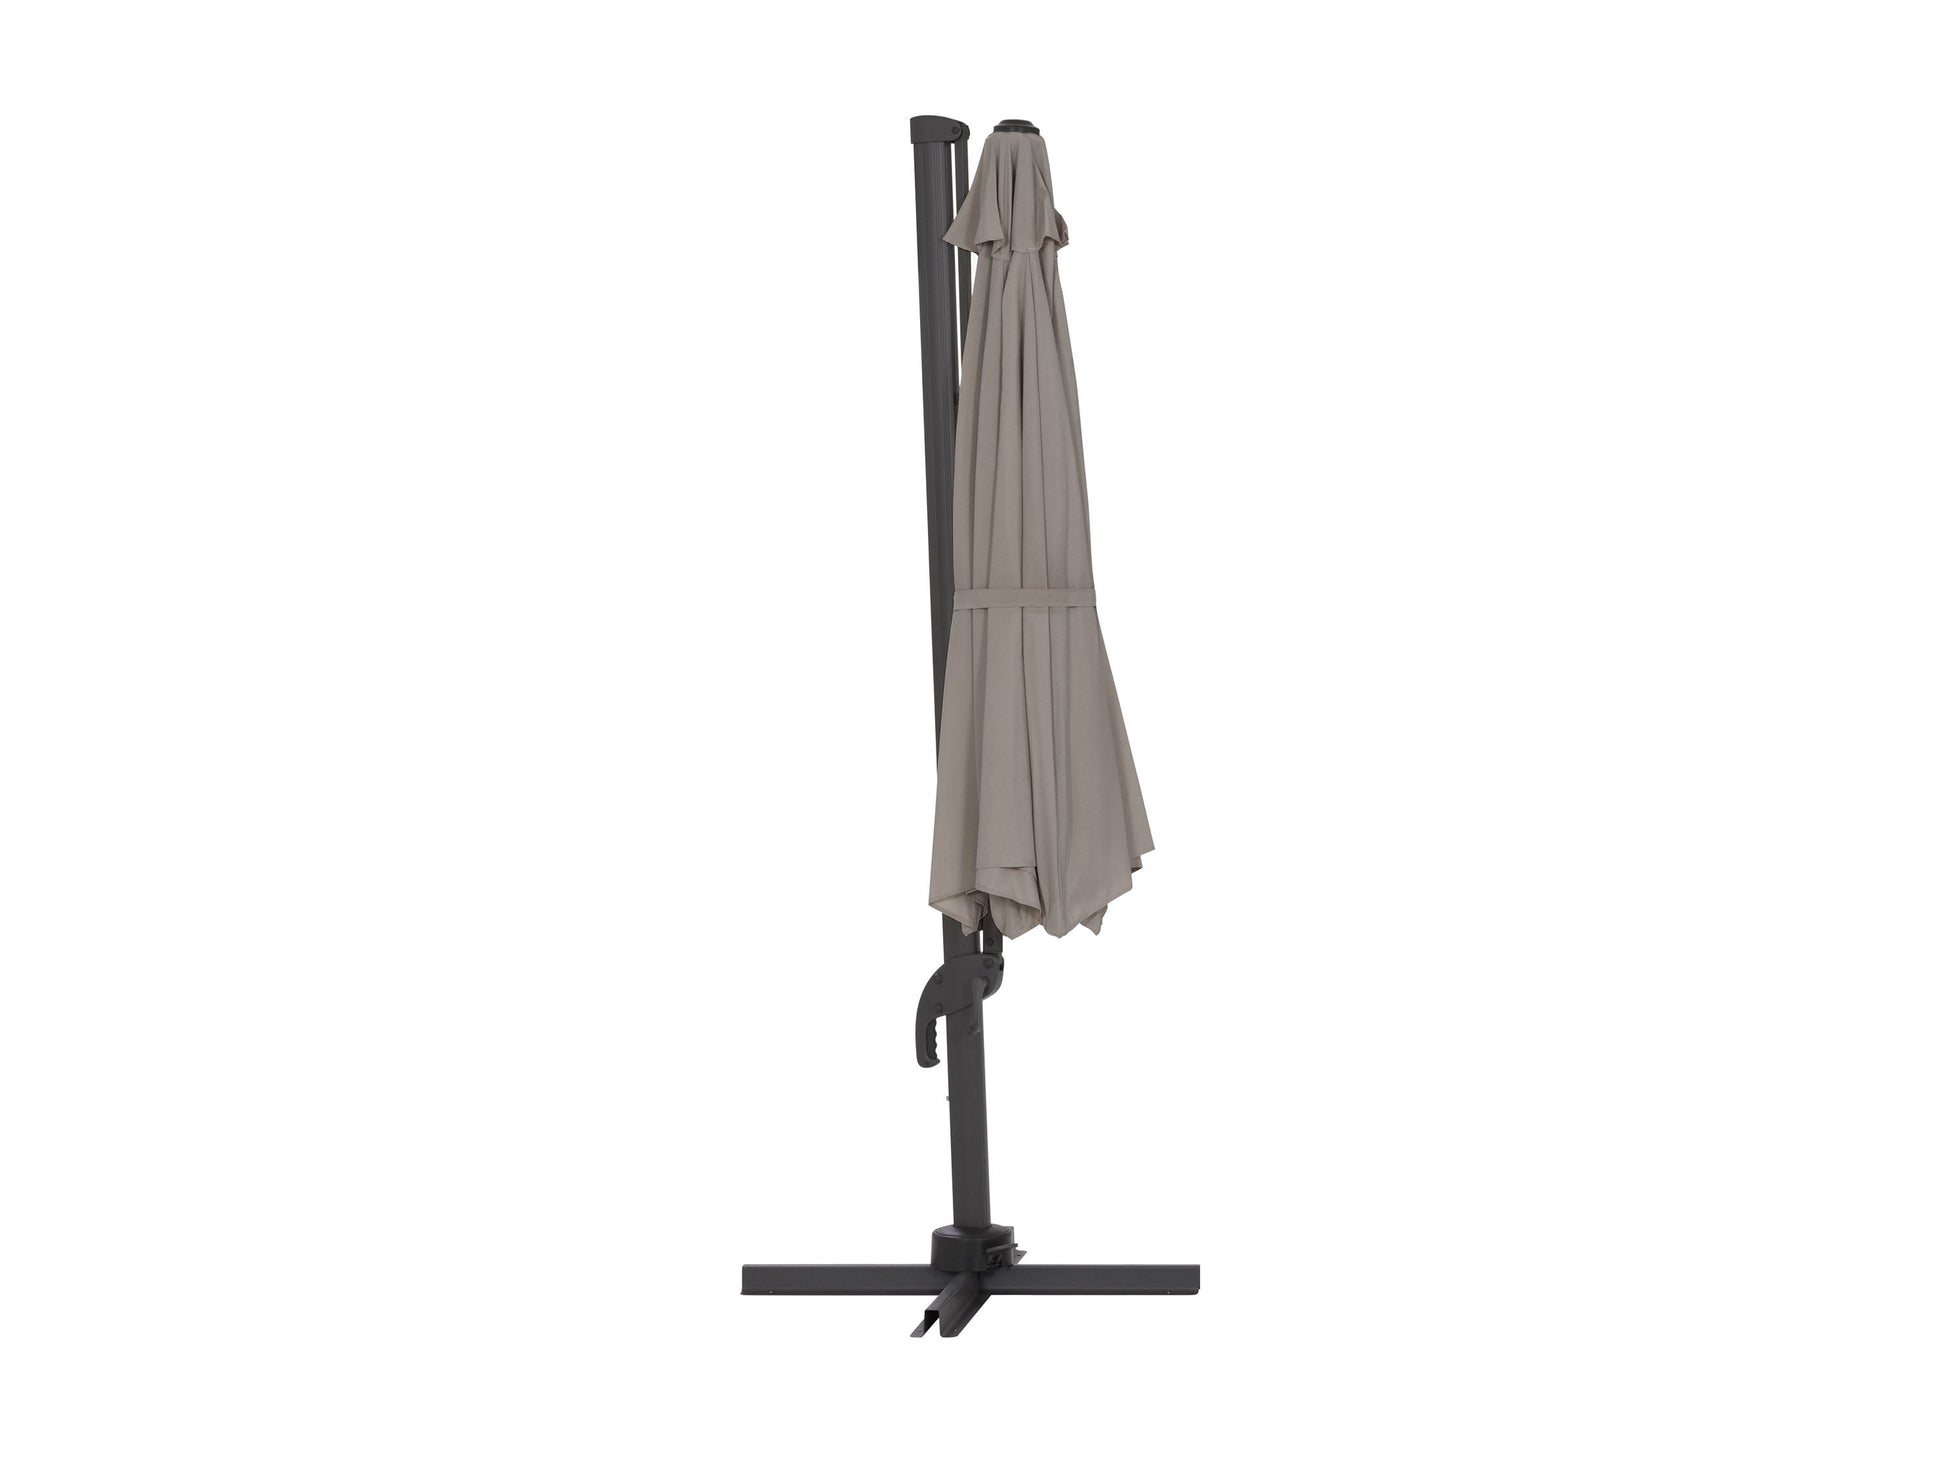 sandy grey deluxe offset patio umbrella 500 Series product image CorLiving#color_sandy-grey